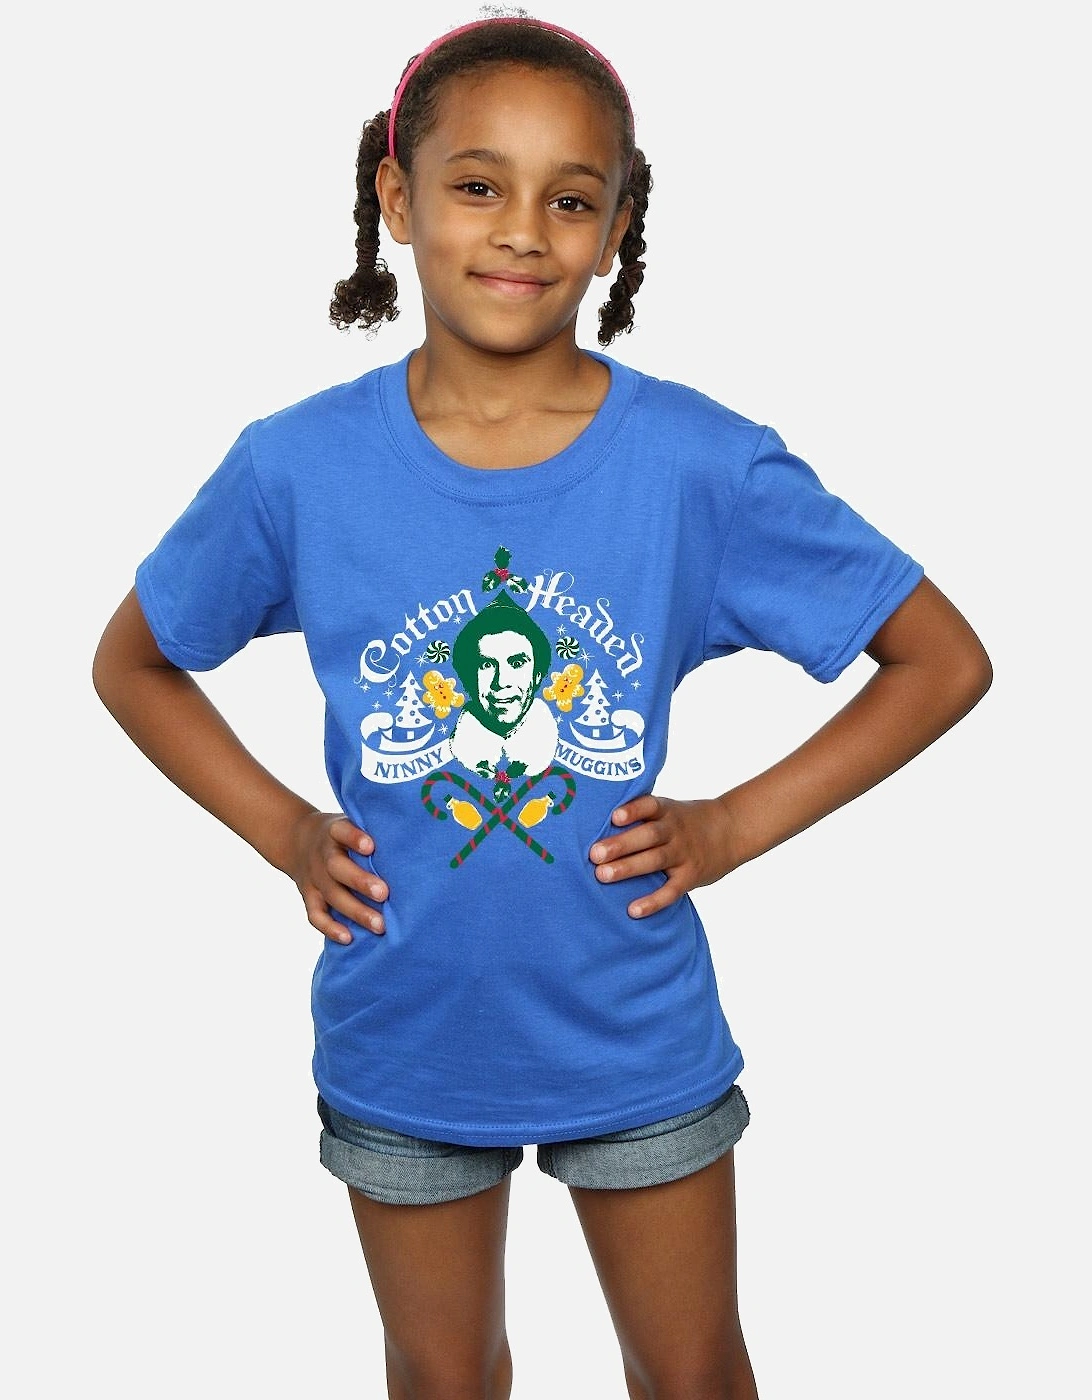 Girls Cotton Headed Ninny Muggins Cotton T-Shirt